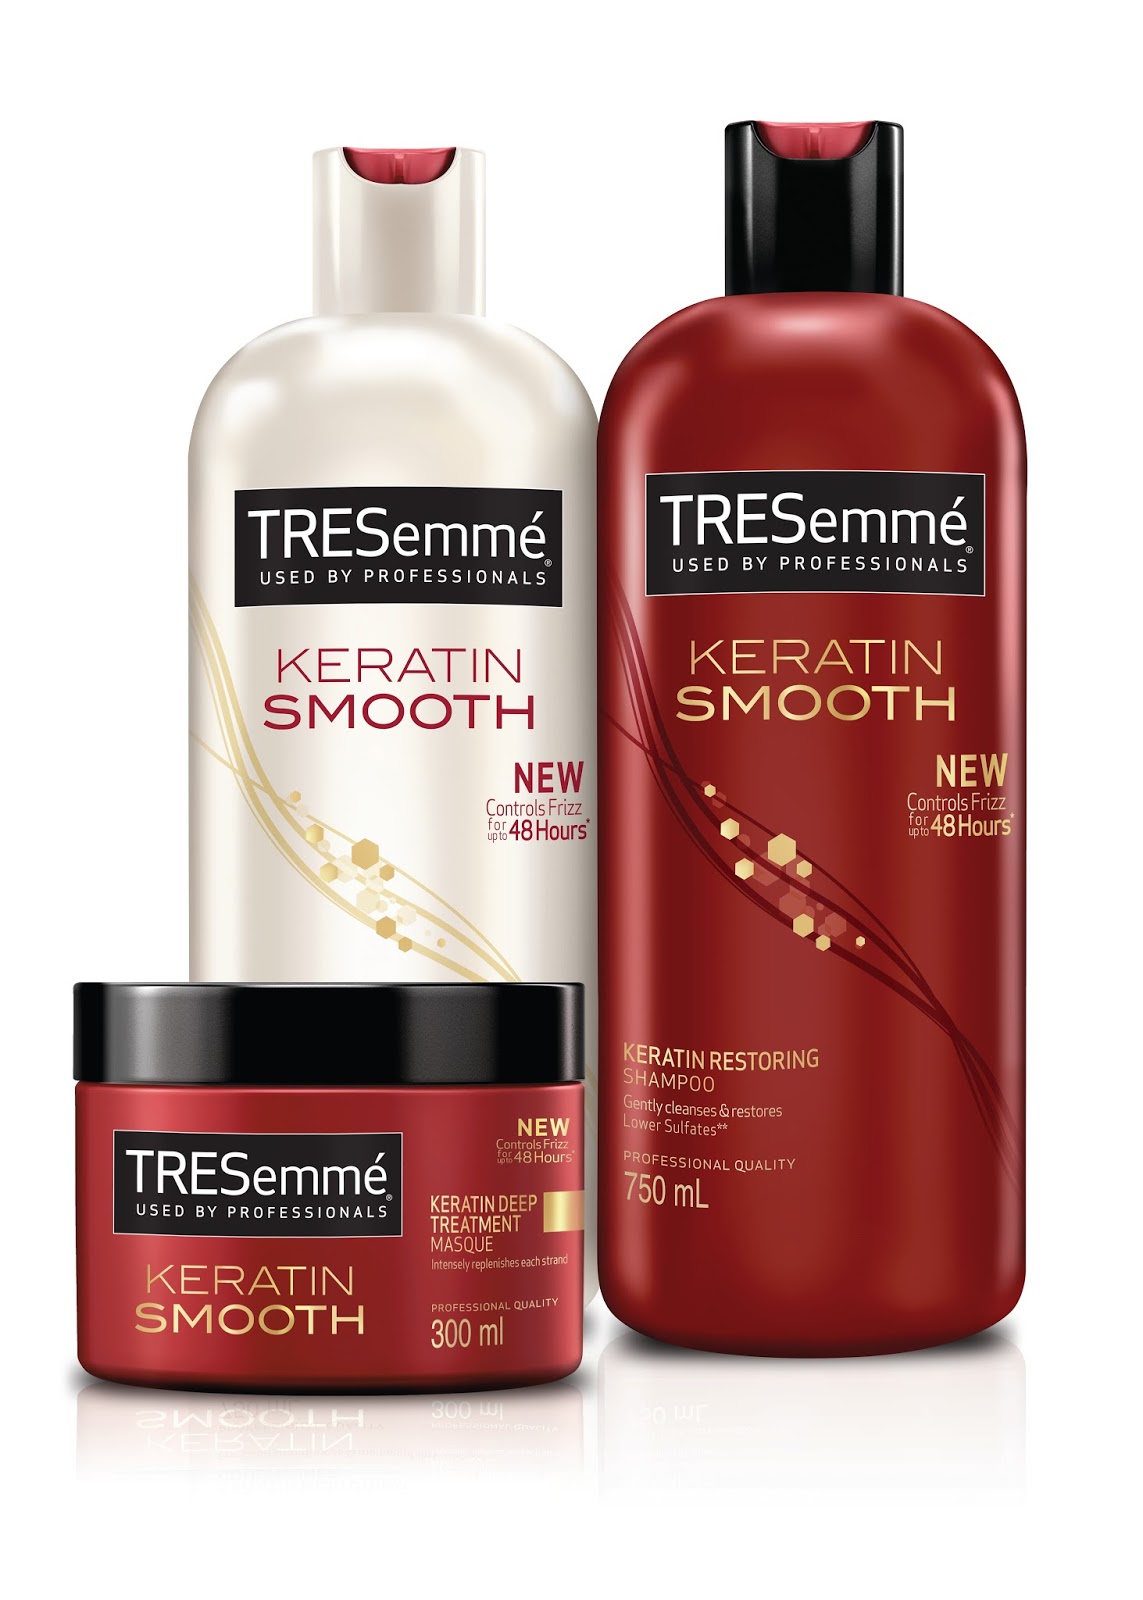 TRESemm%C3%A8+Keratin+Smooth+product+pack.jpg